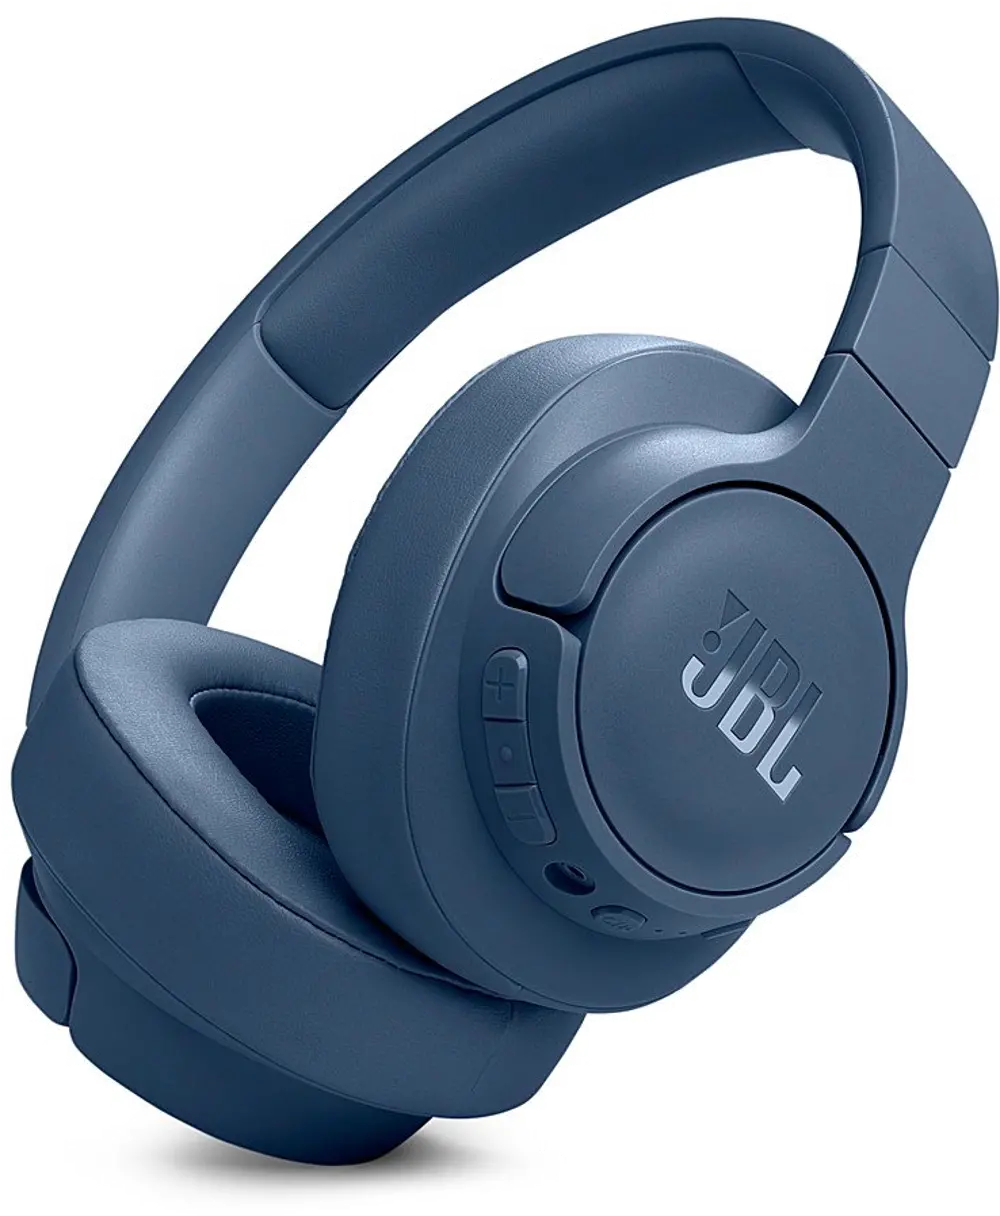 JBLT770NCBLUAM JBL Noise Cancelling Wireless Over-Ear Headphones - Blue-1